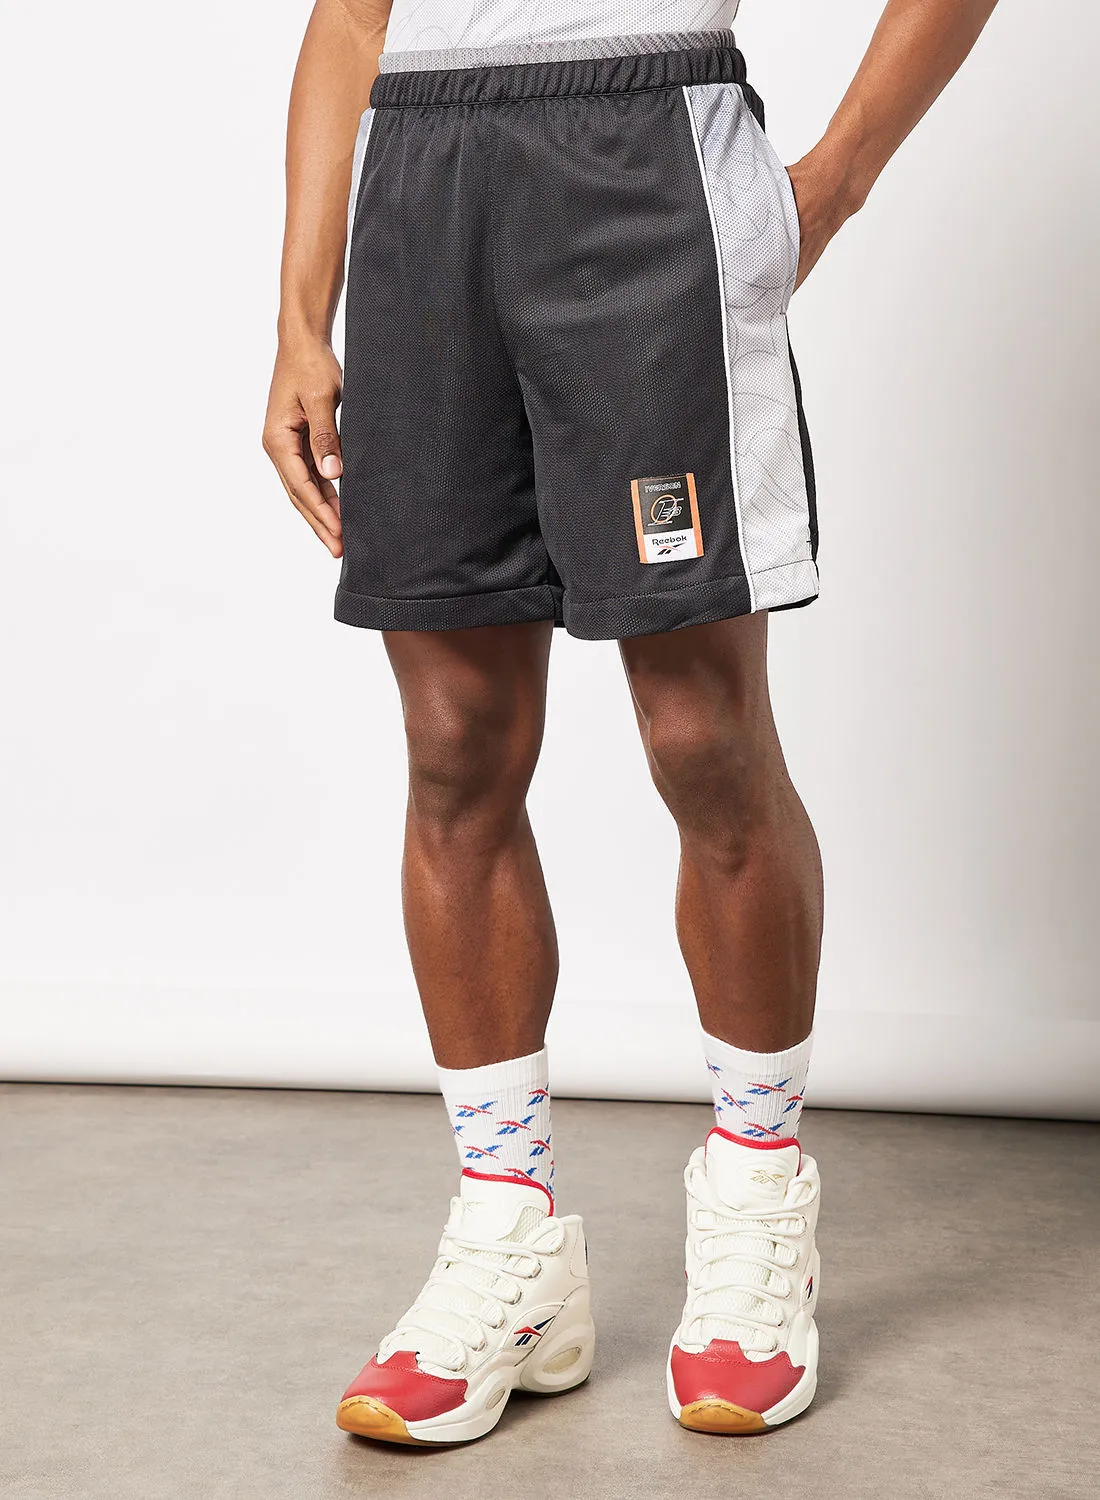 Reebok Iverson Basketball Shorts